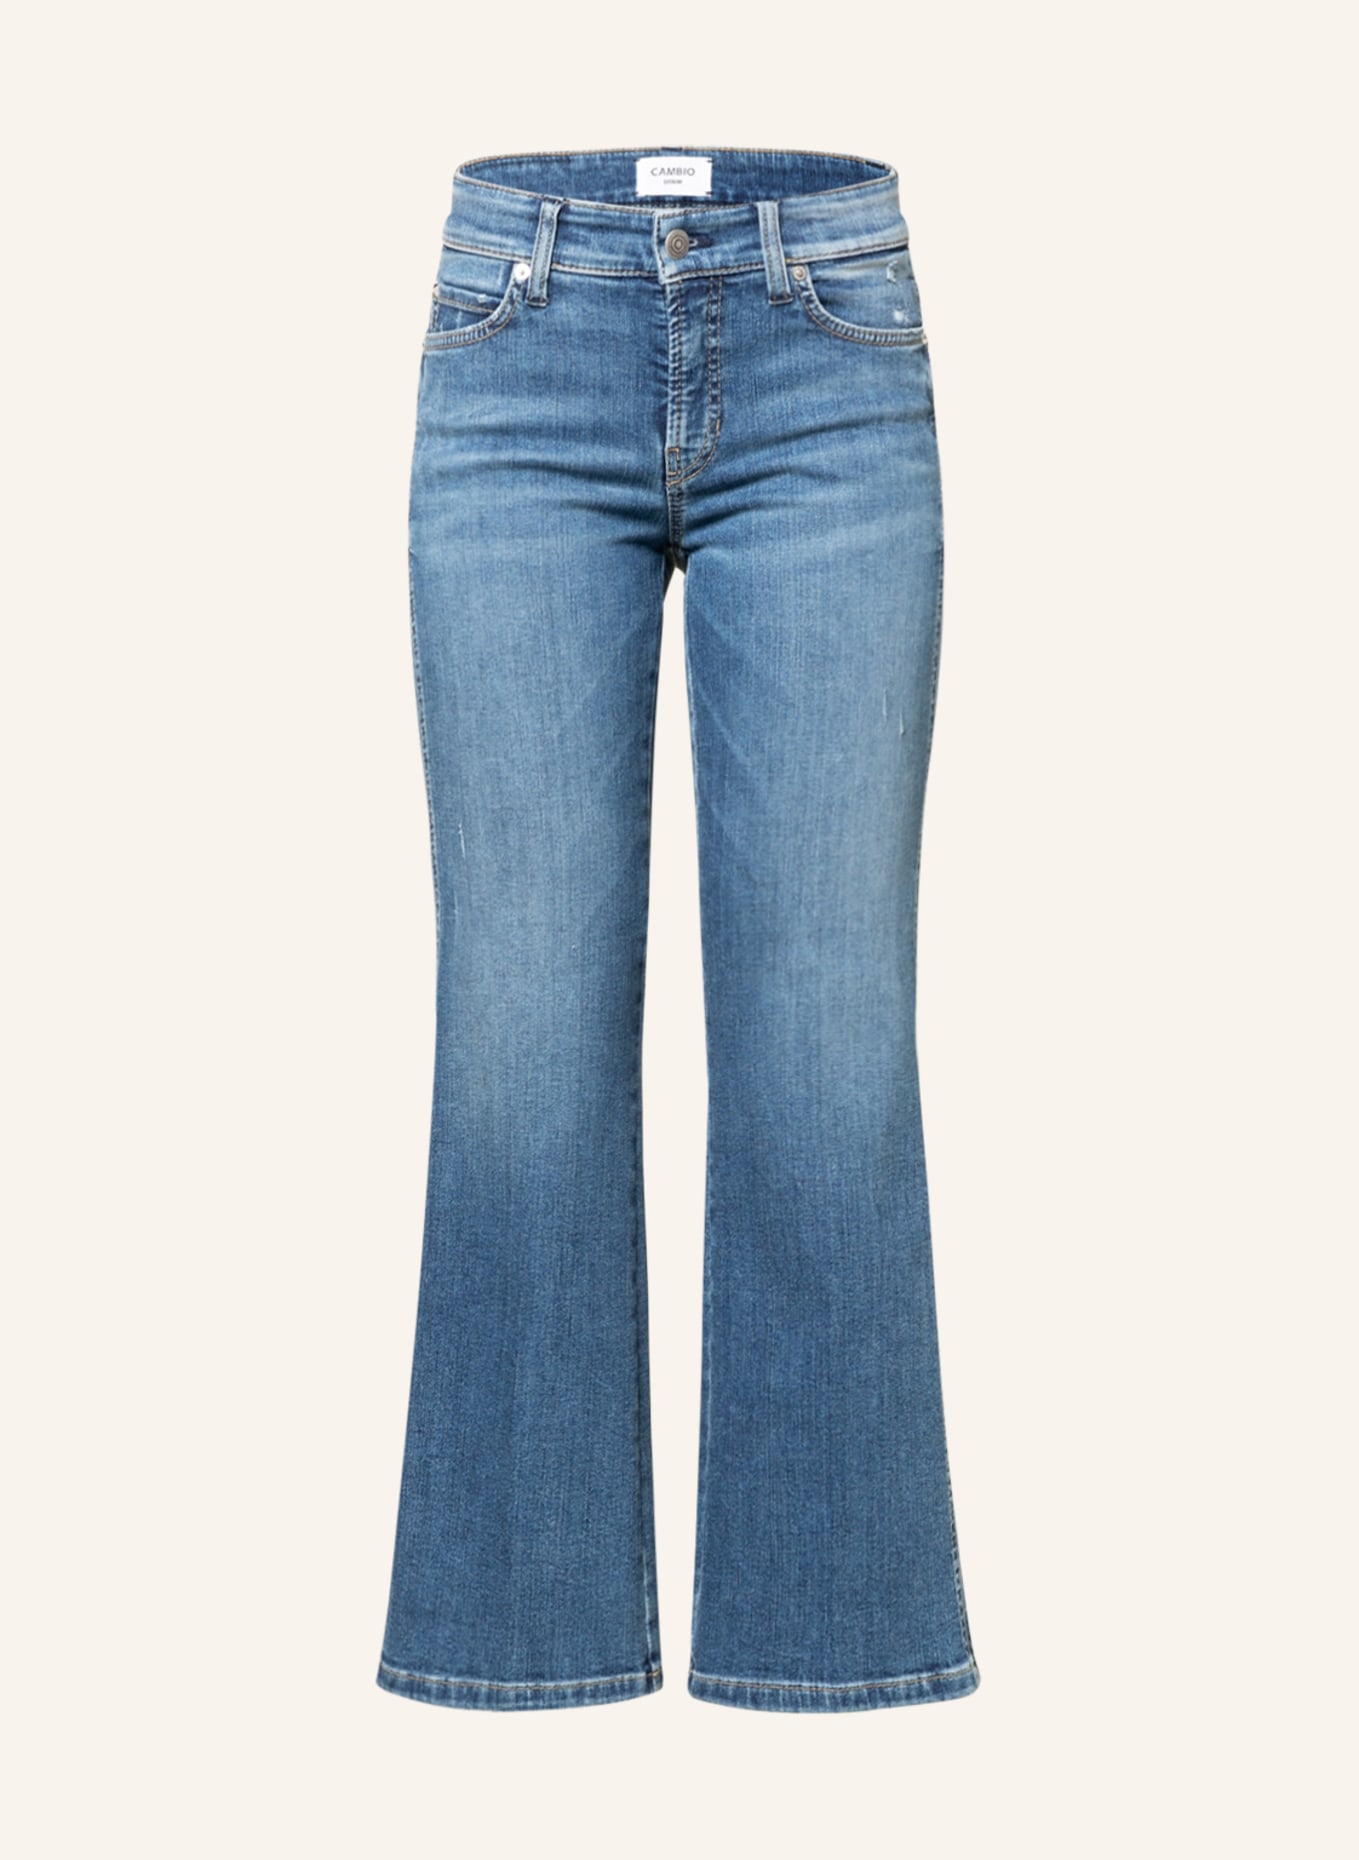 CAMBIO 7/8-Jeans PARIS, Farbe: 5180 vintage contrast kneecut (Bild 1)